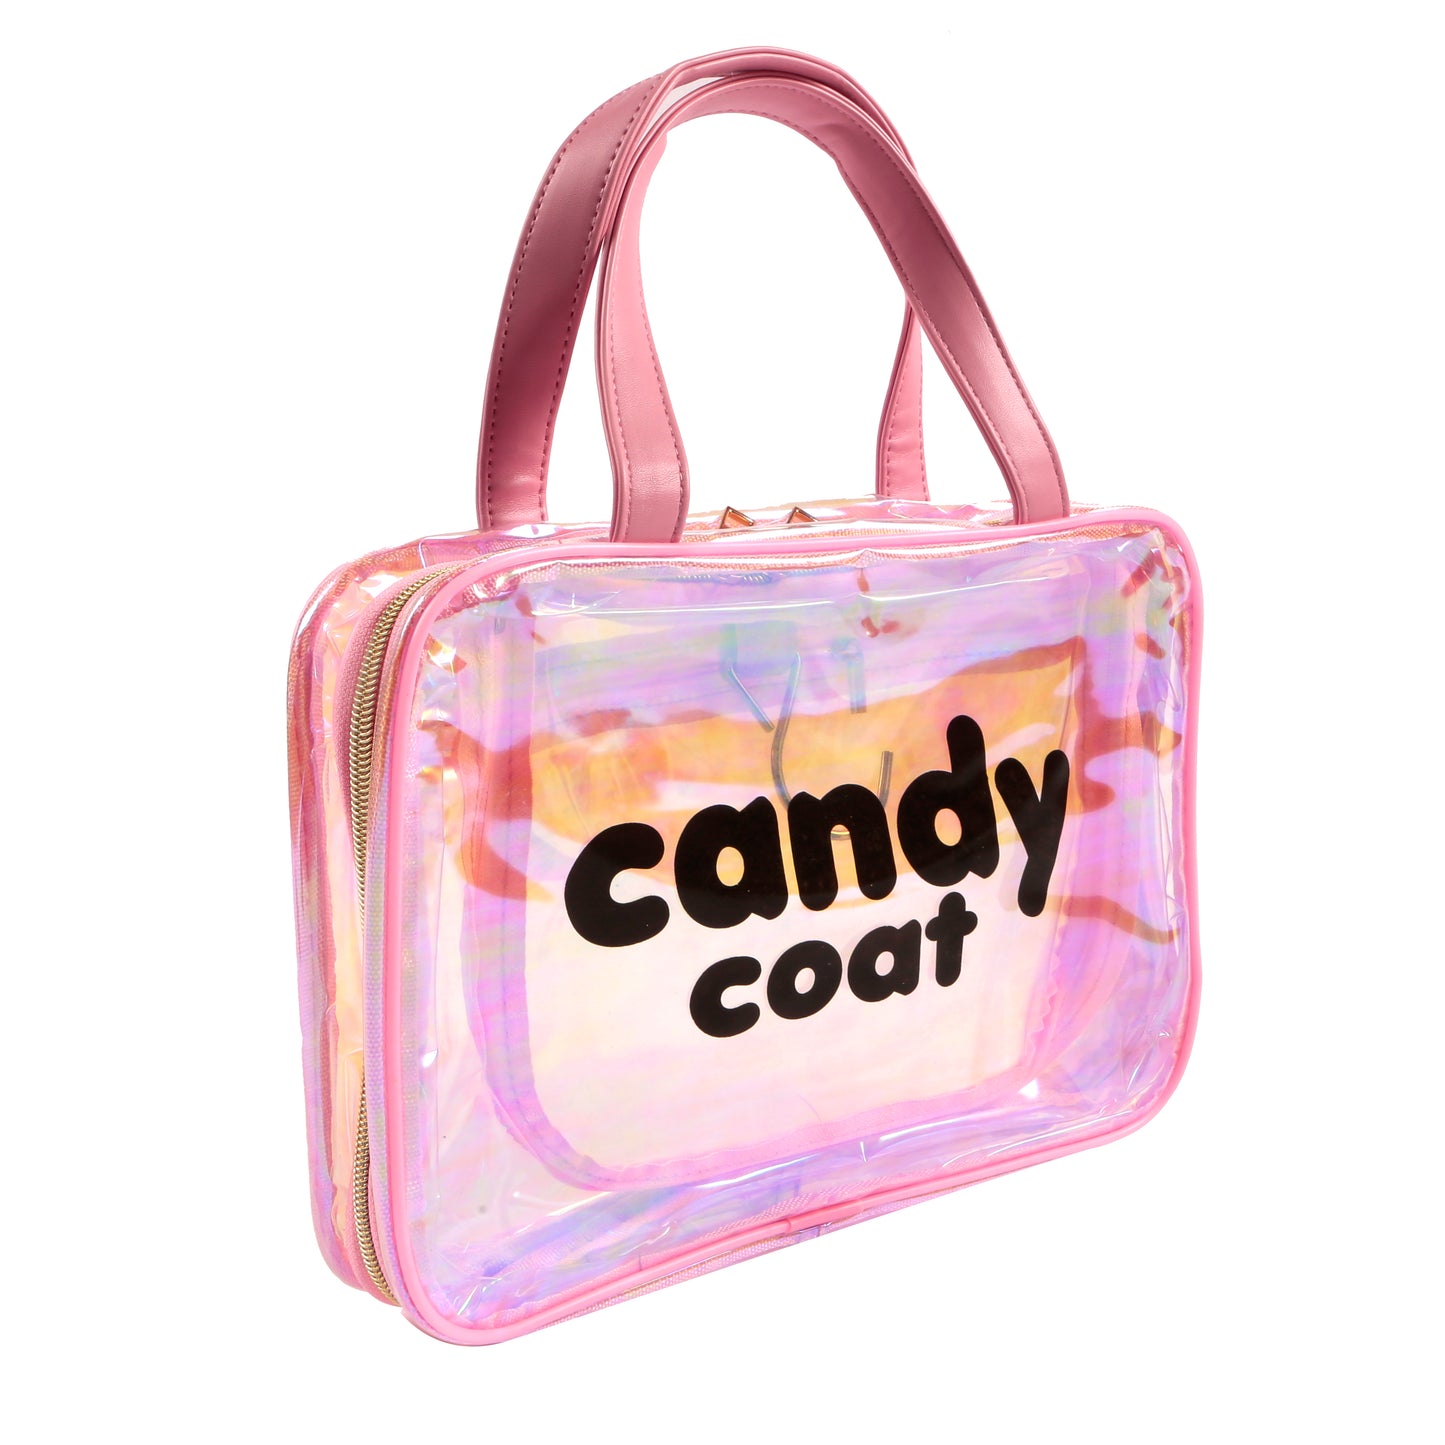 Candy Coat - Holo Beauty Bag - Candy Coat